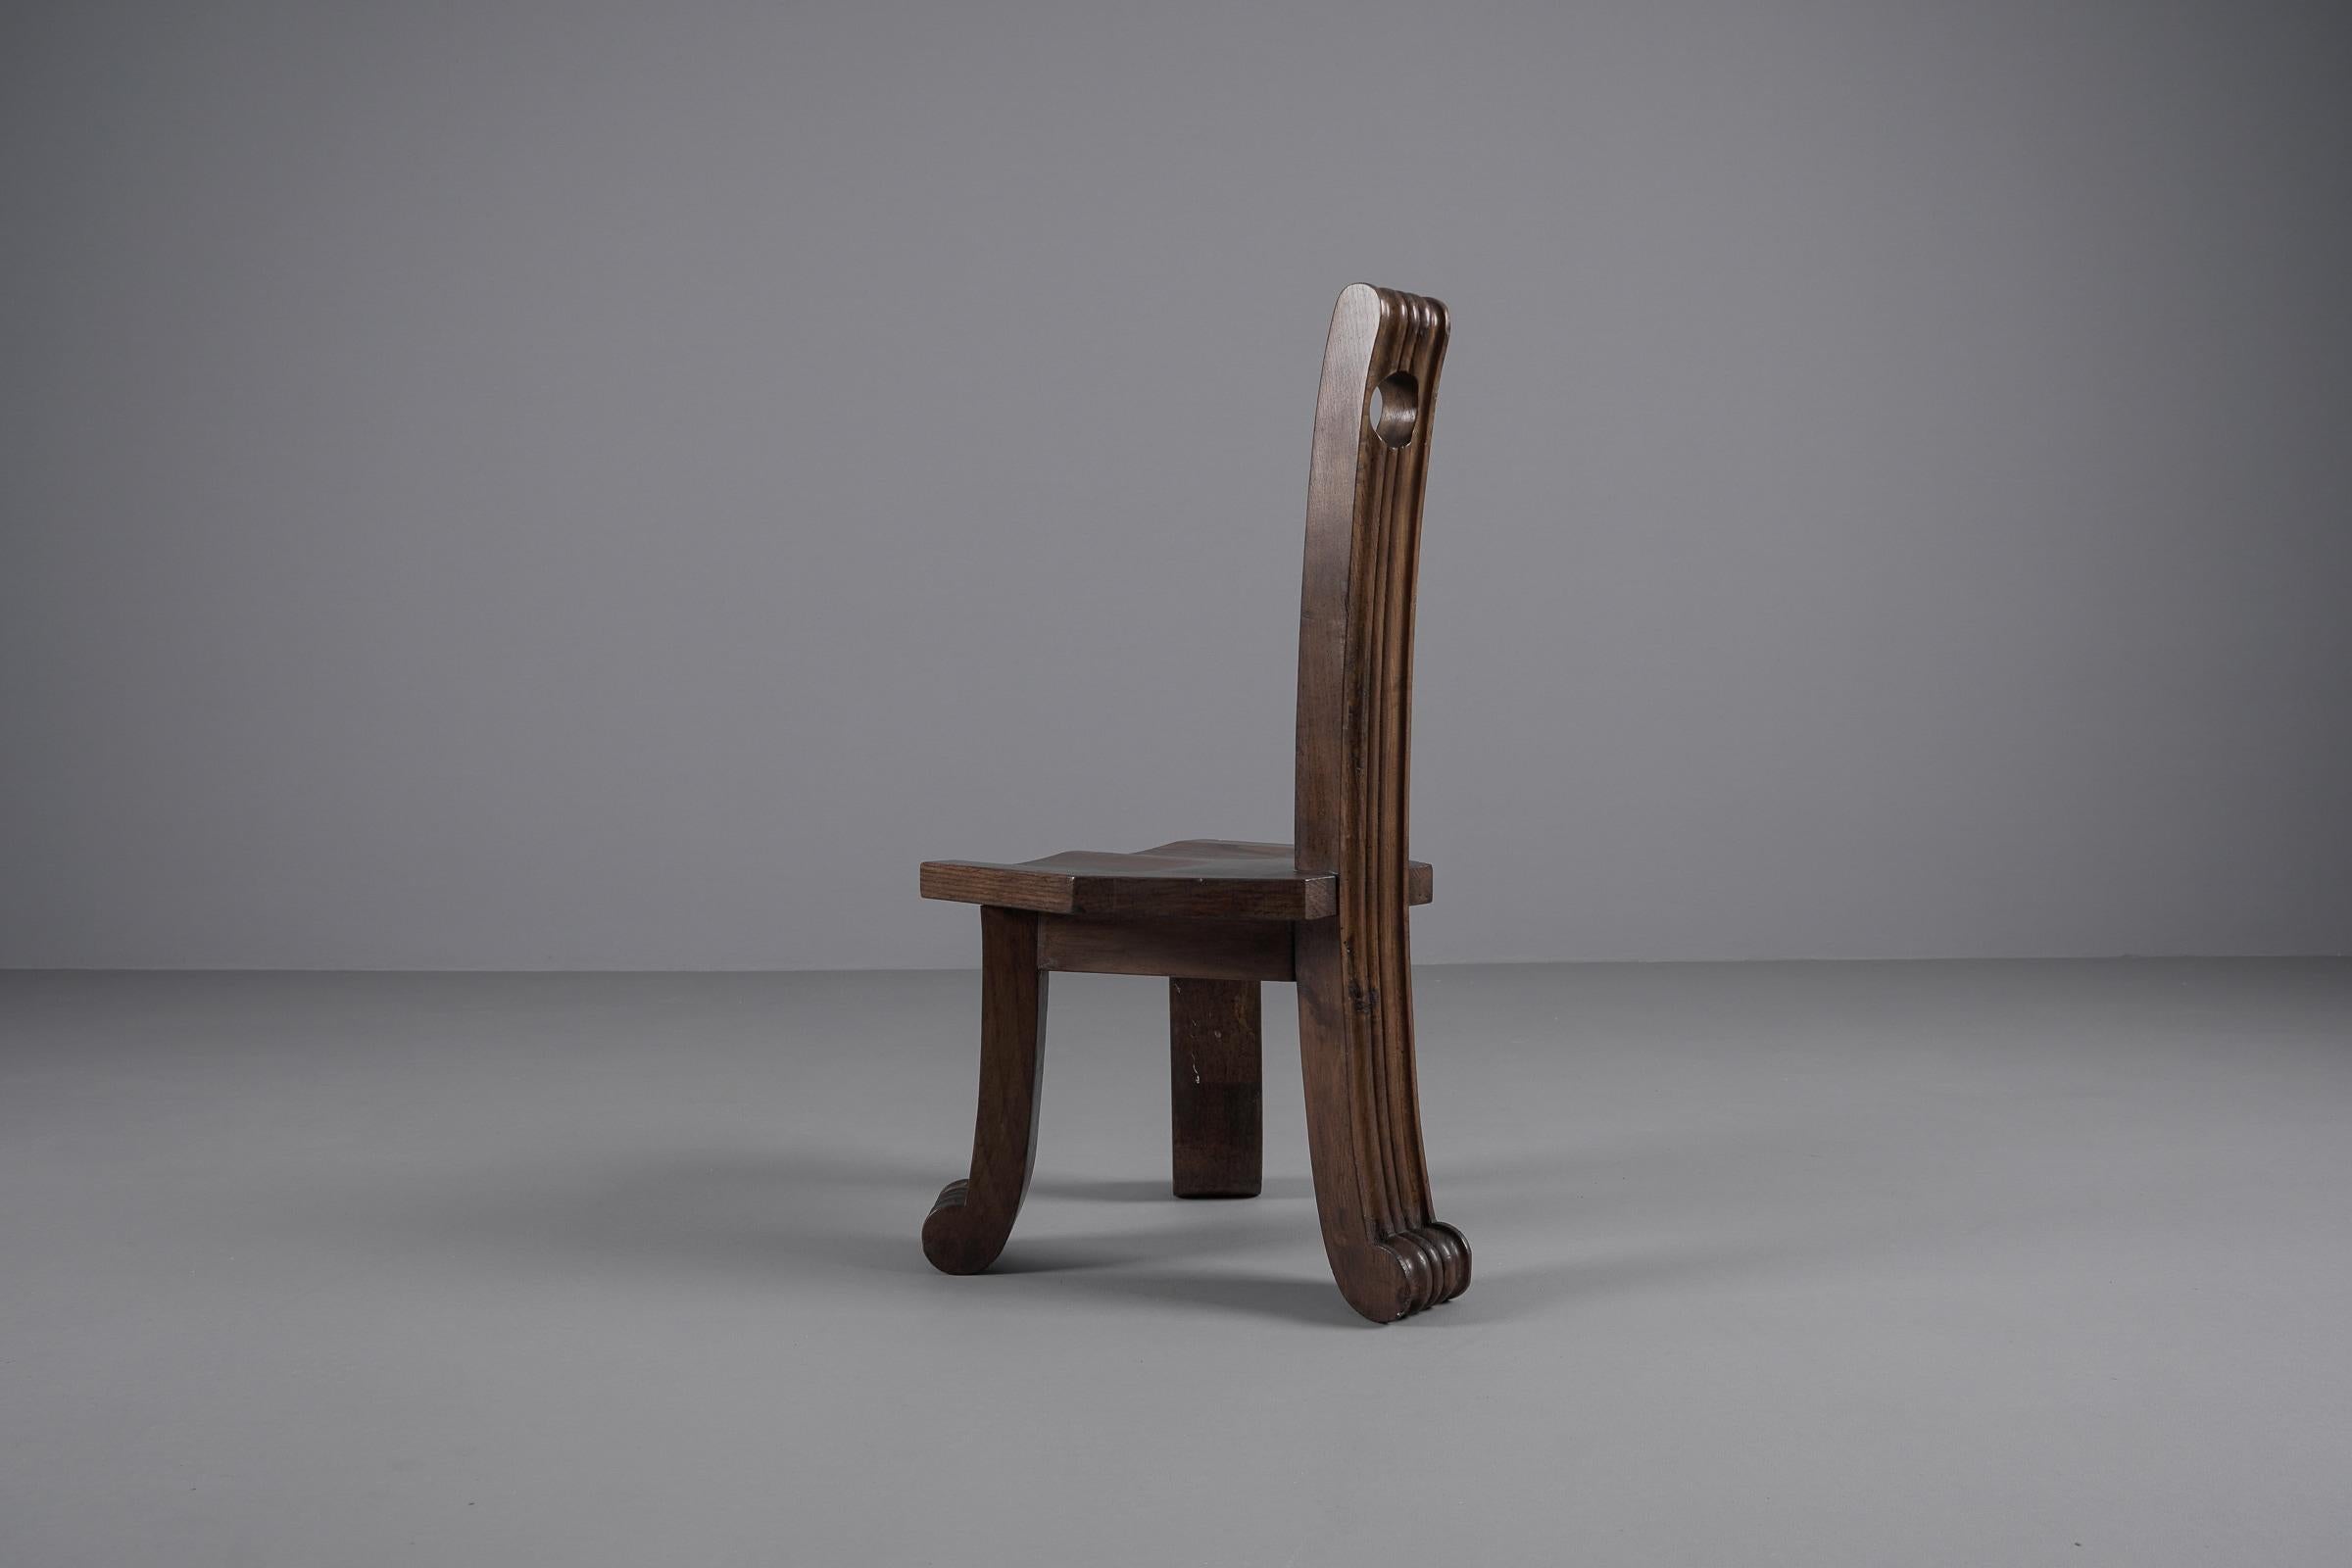 Primitive Rustic Britalist Modern Sculptured Chair, 1940s Europe 4